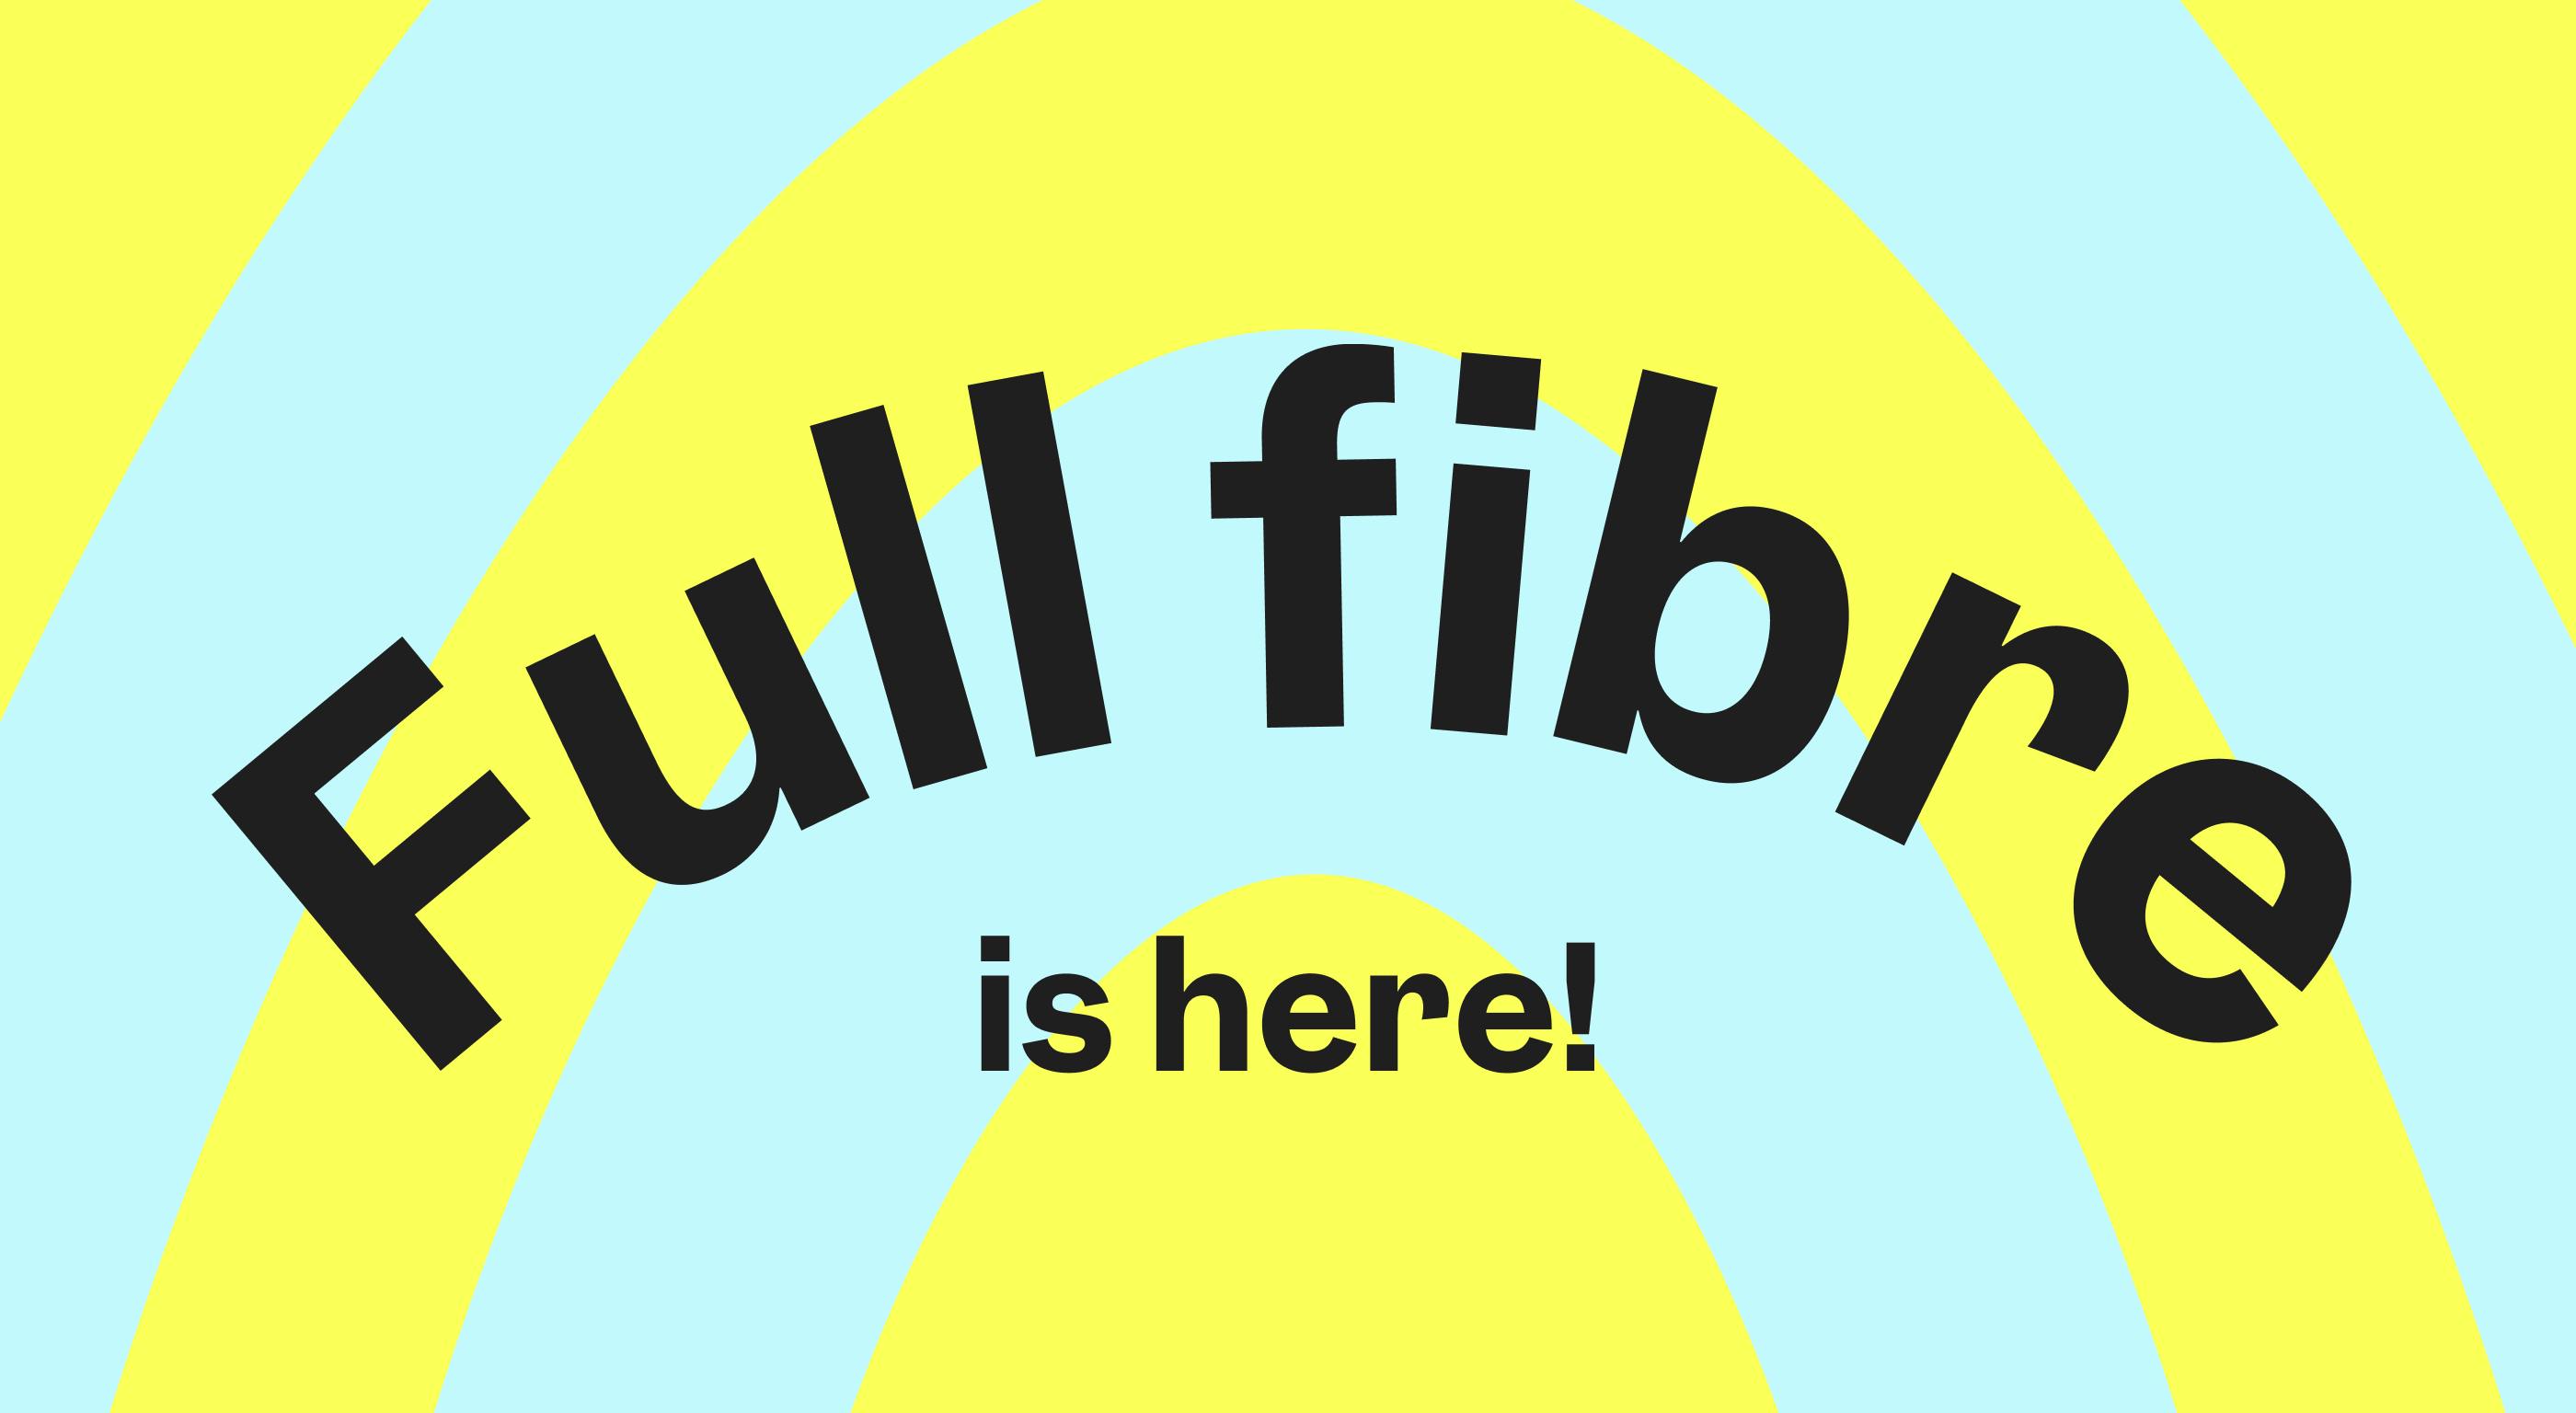 Cuckoo's 1GB full fibre broadband is here